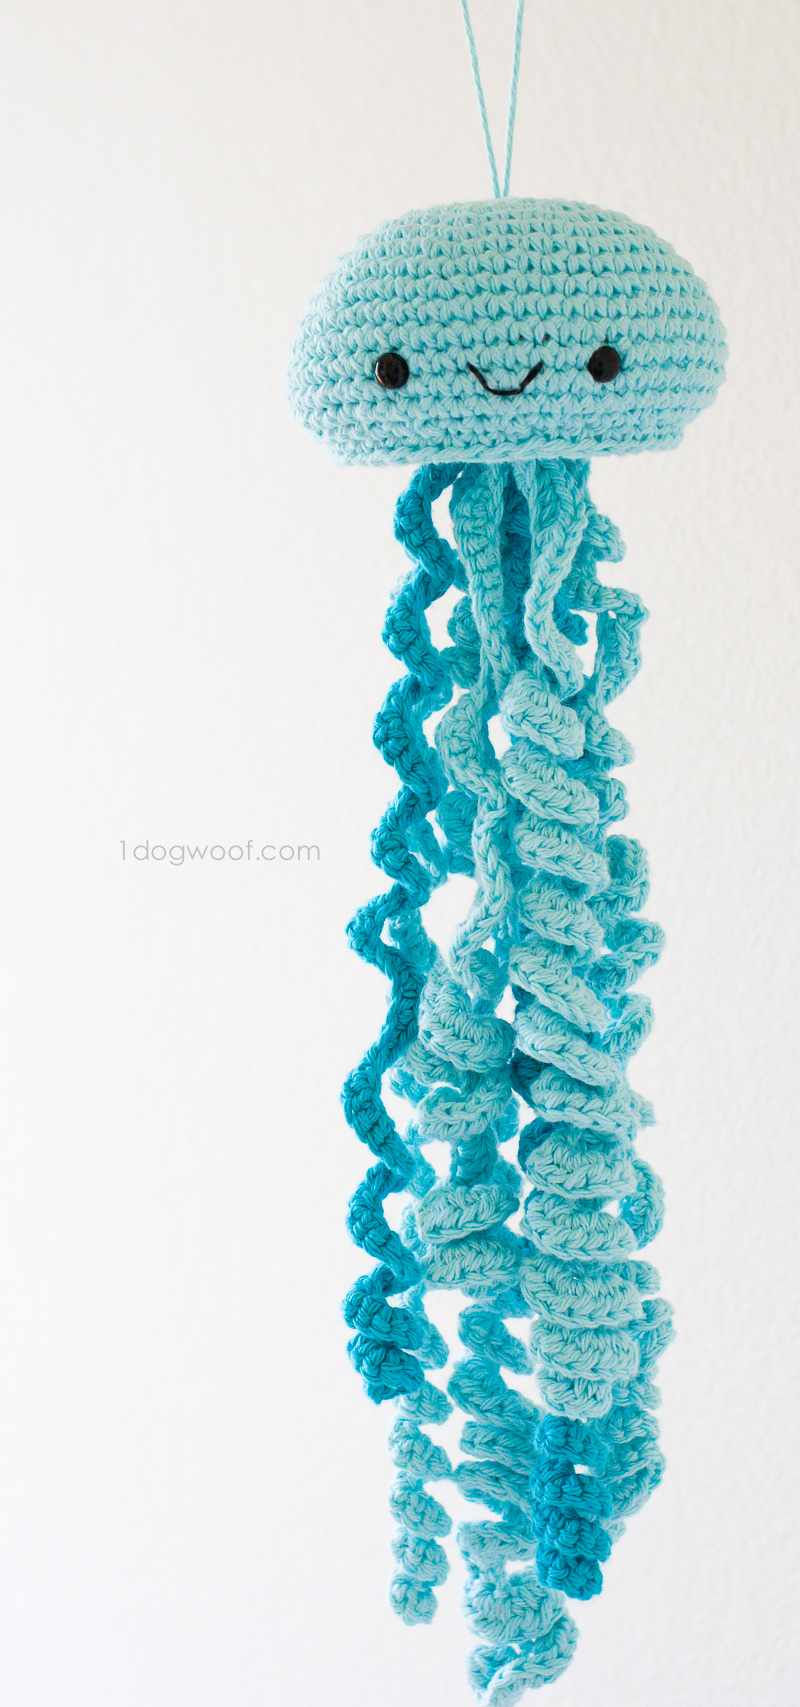 Cute Crochet Patterns Crochet Jellyfish One Dog Woof